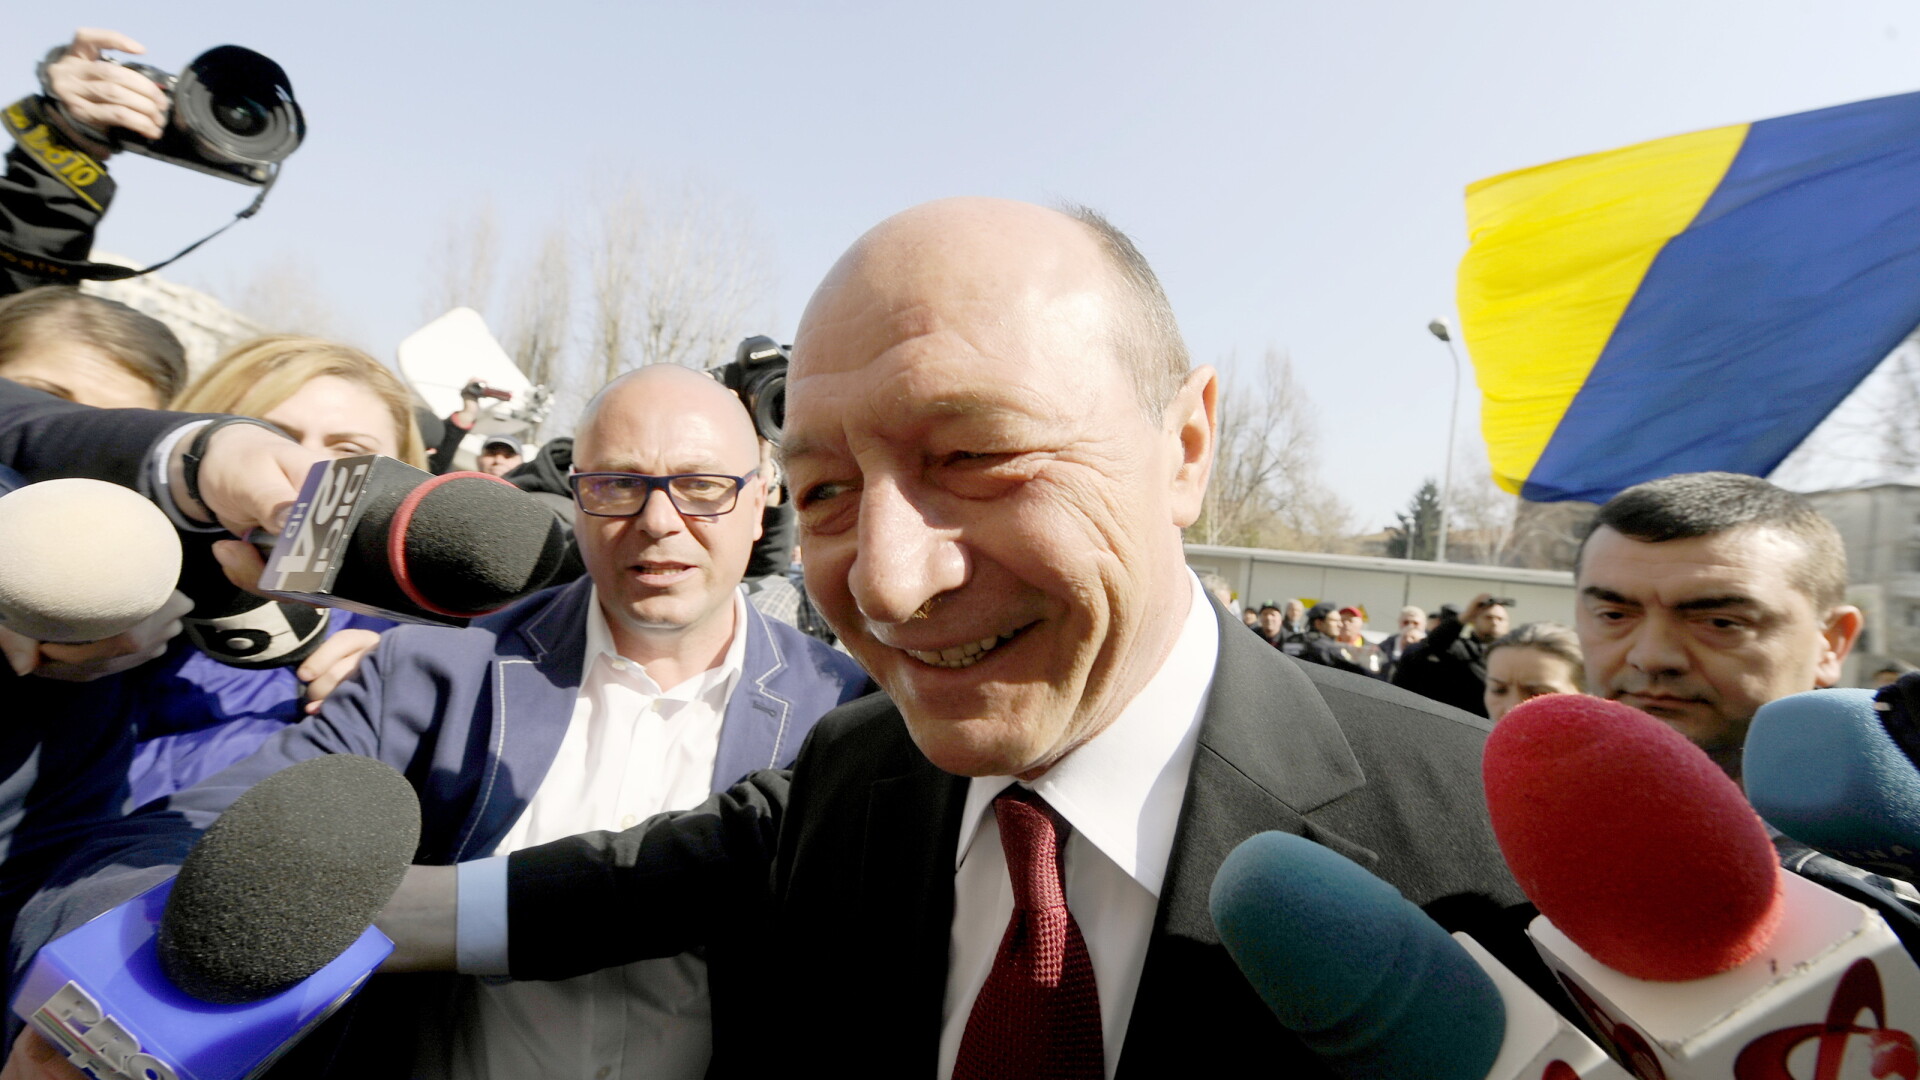 Traian Basescu - AGERPRES